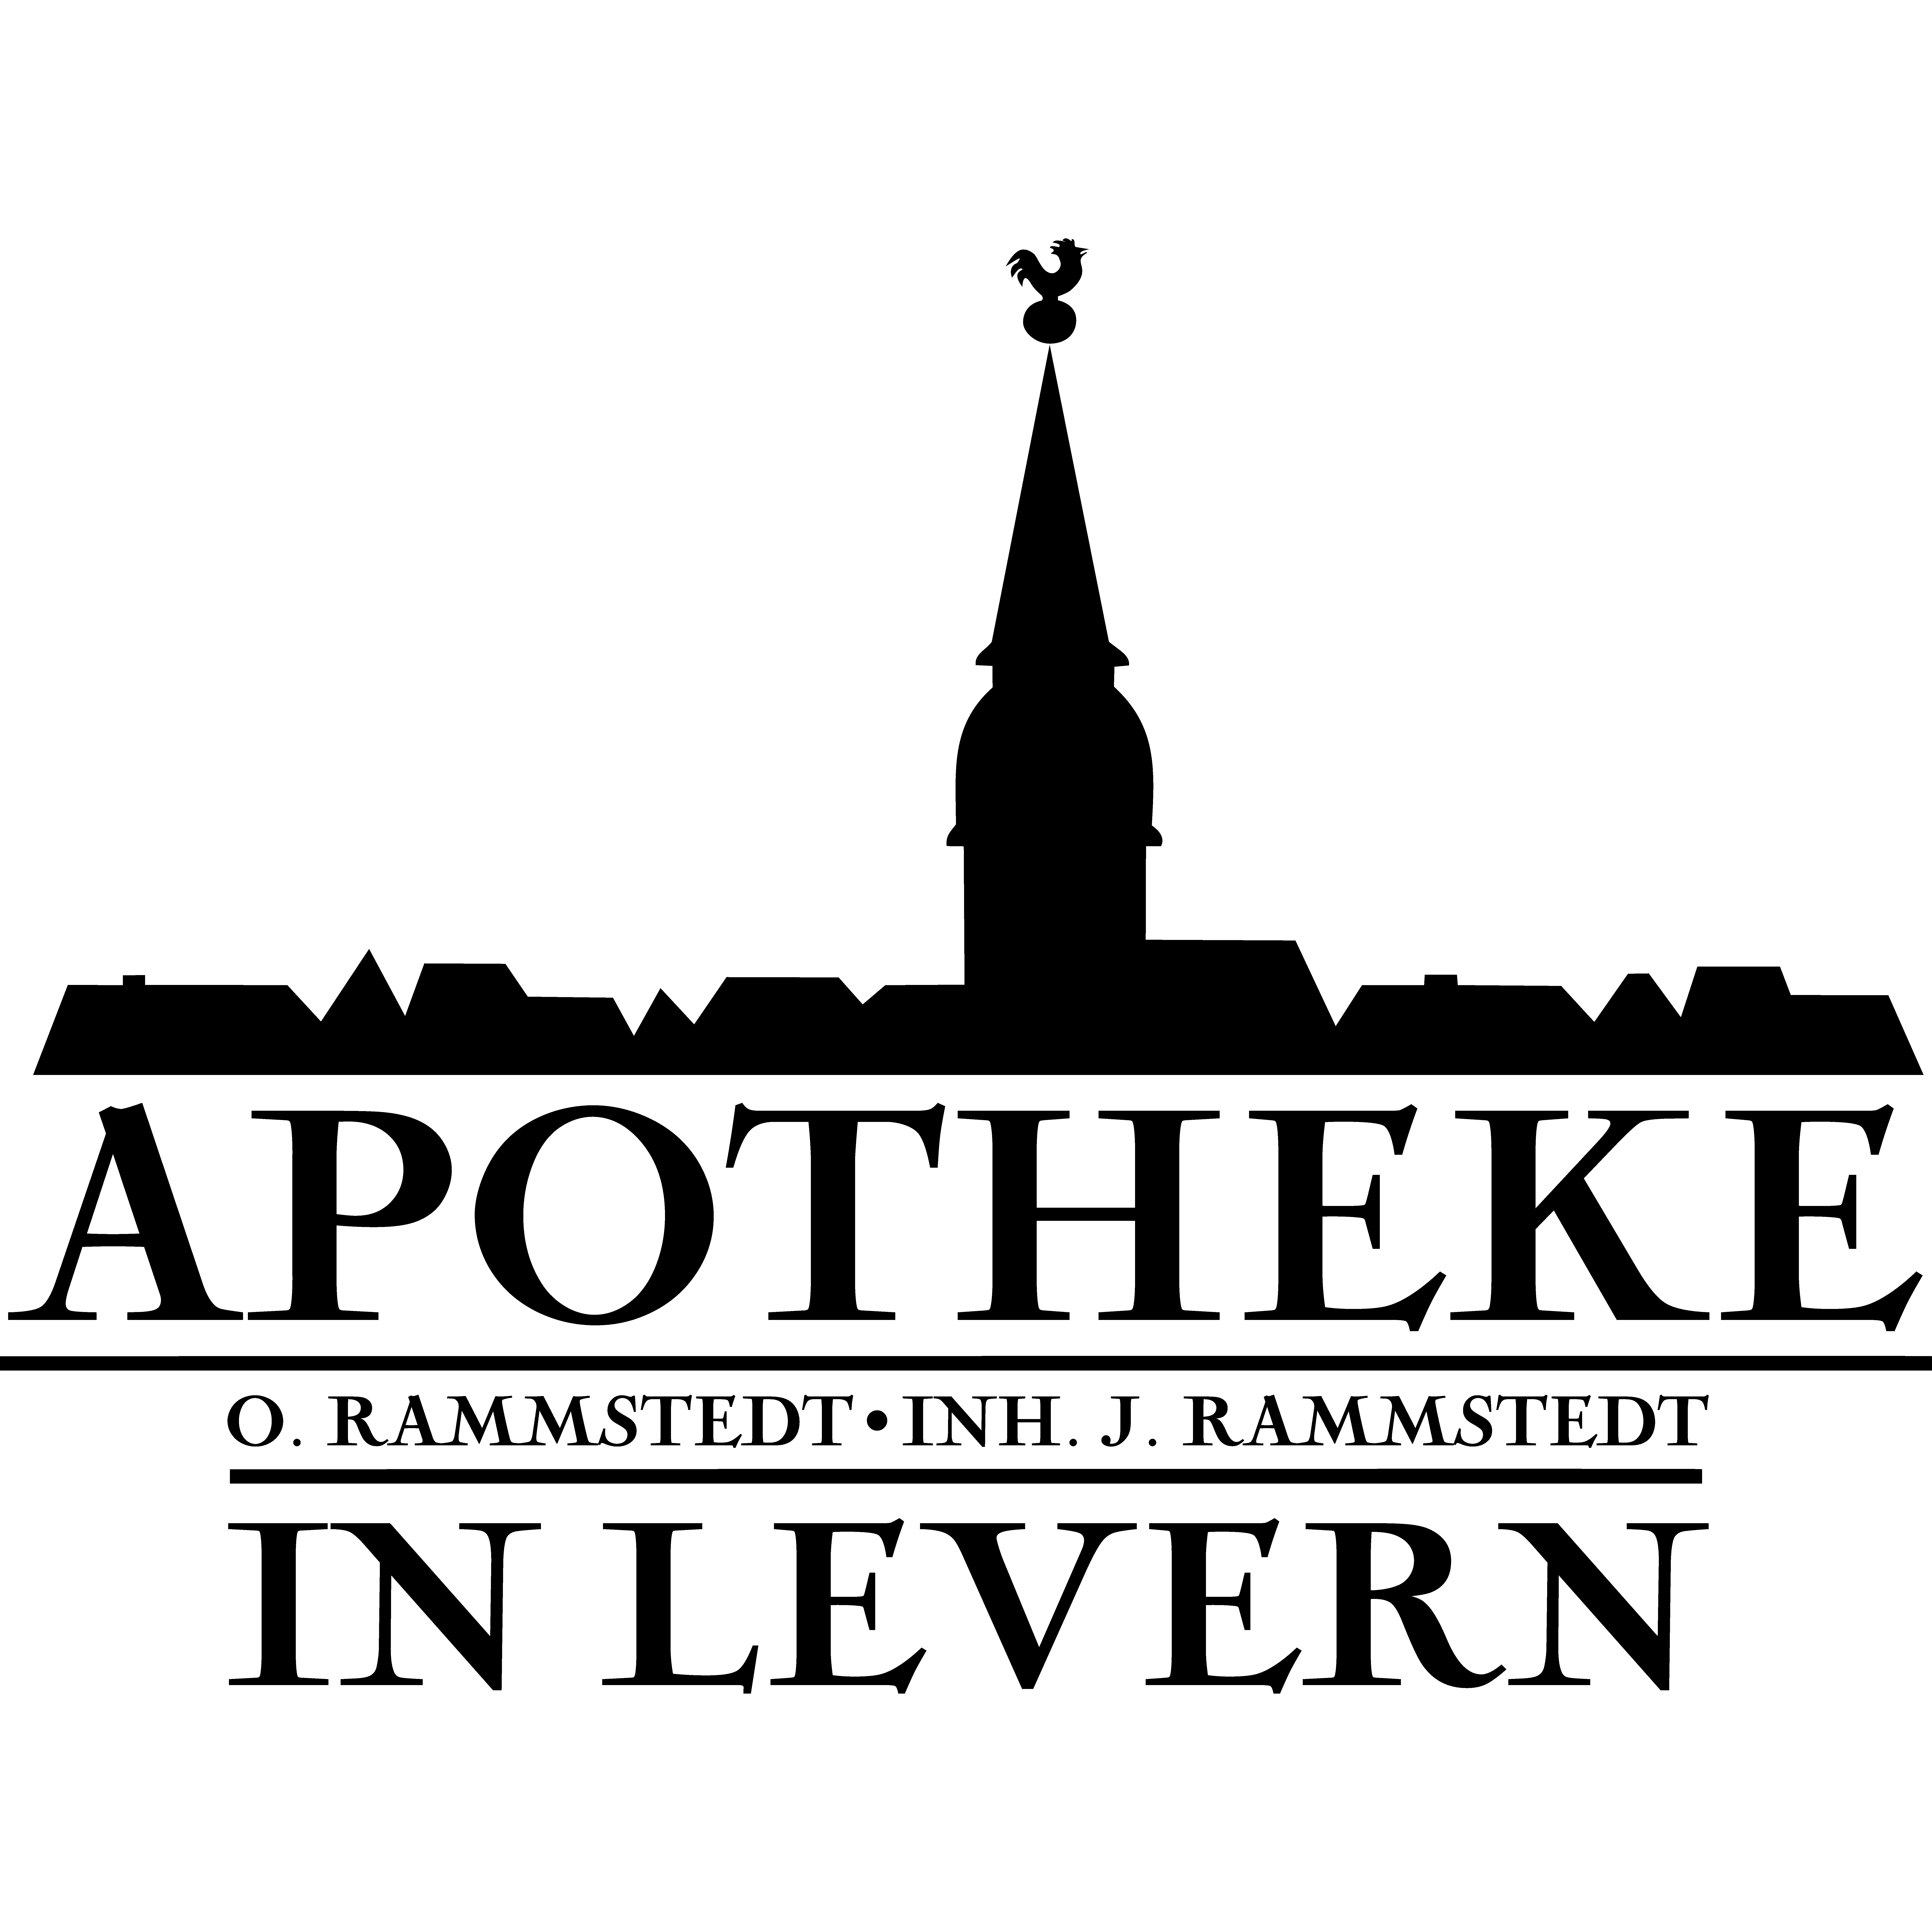 Apotheke in Levern in Stemwede - Logo